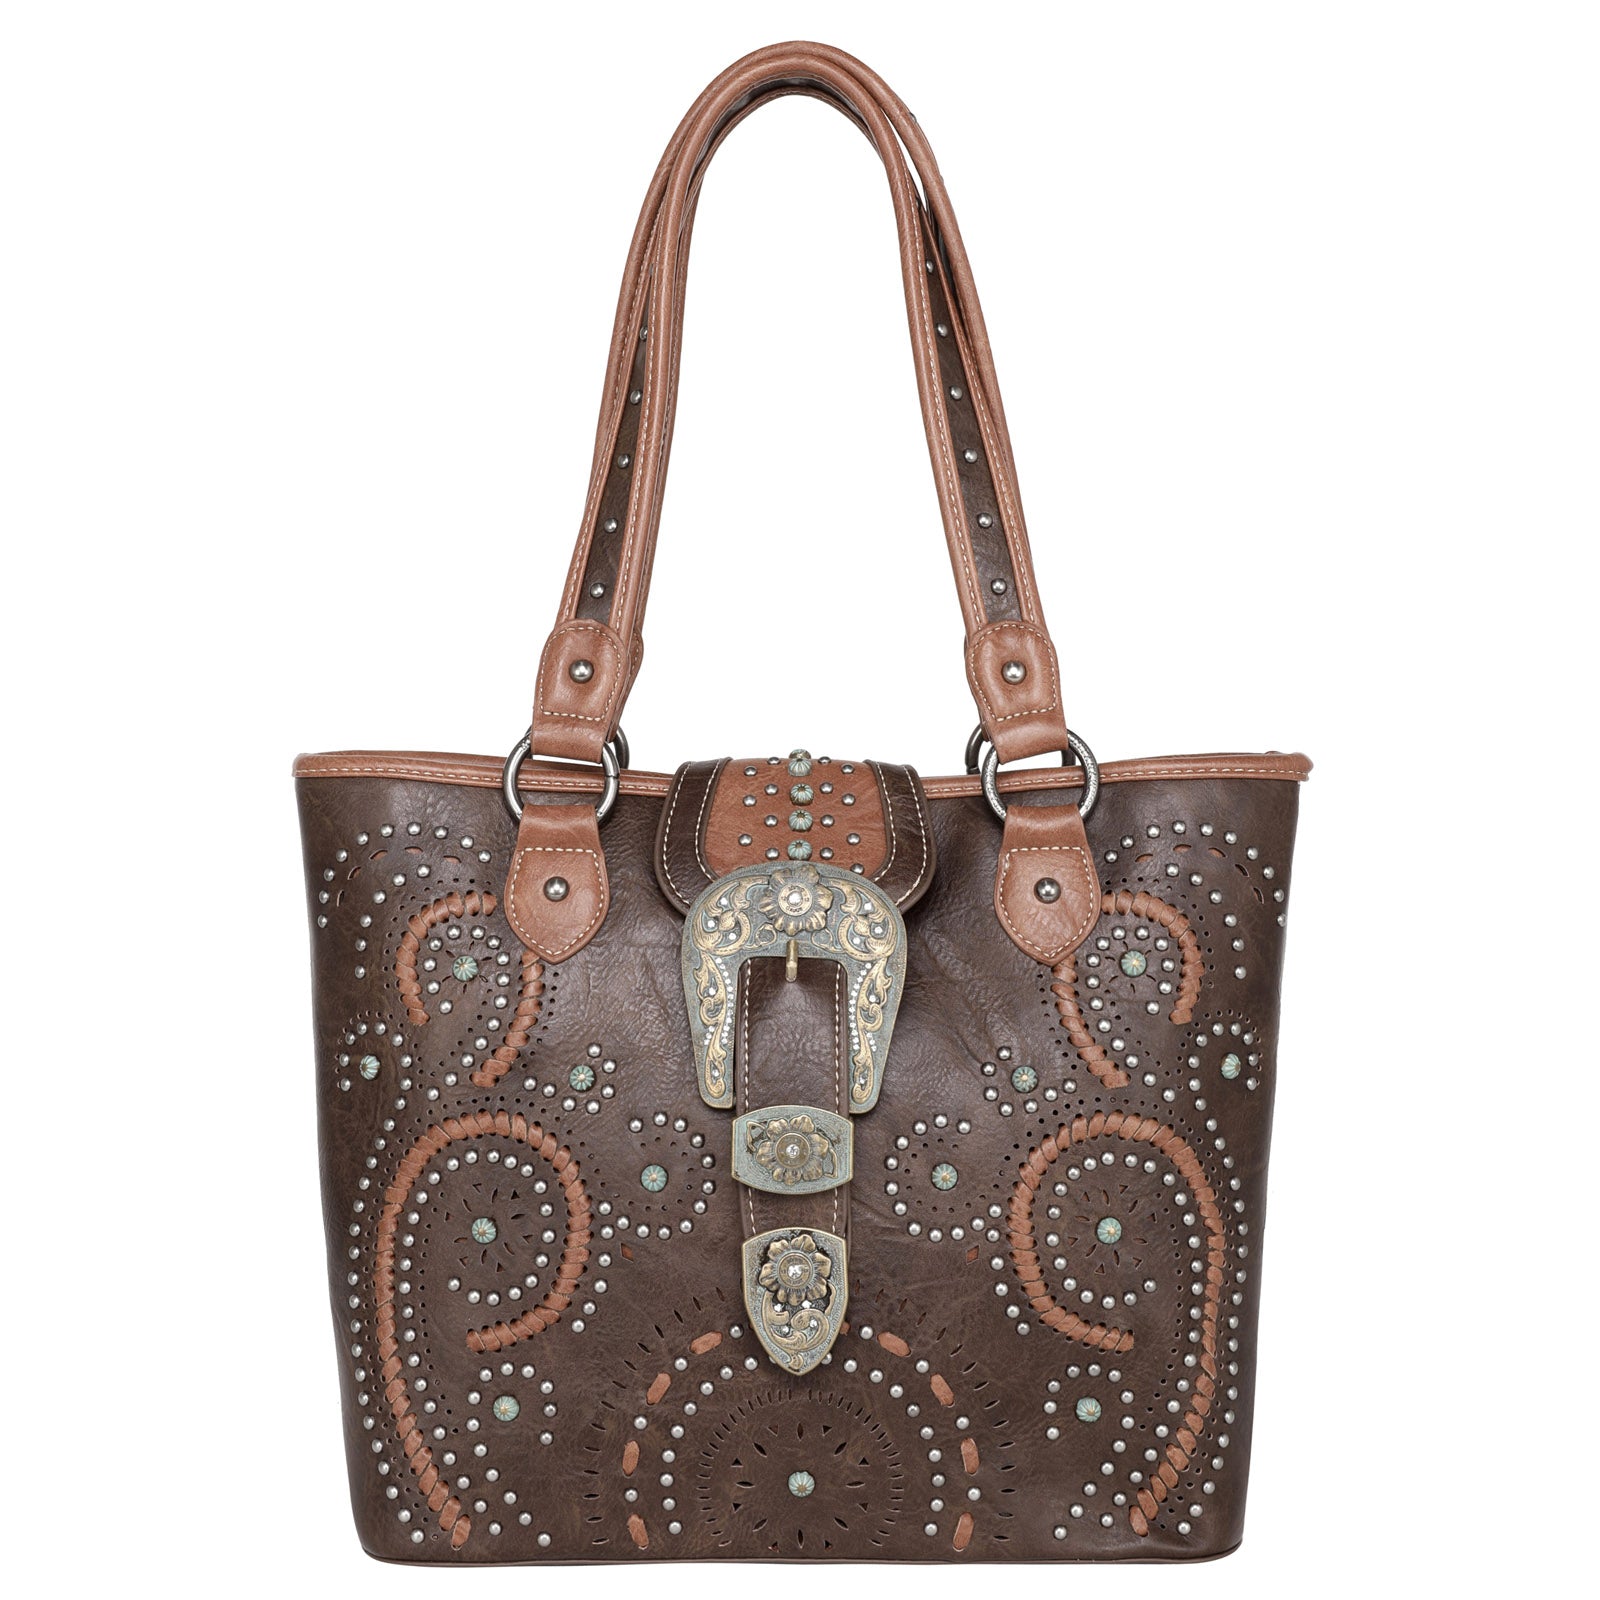 Imitations Handbags WholeSale - Price List, Bulk Buy at SupplyLeader.com